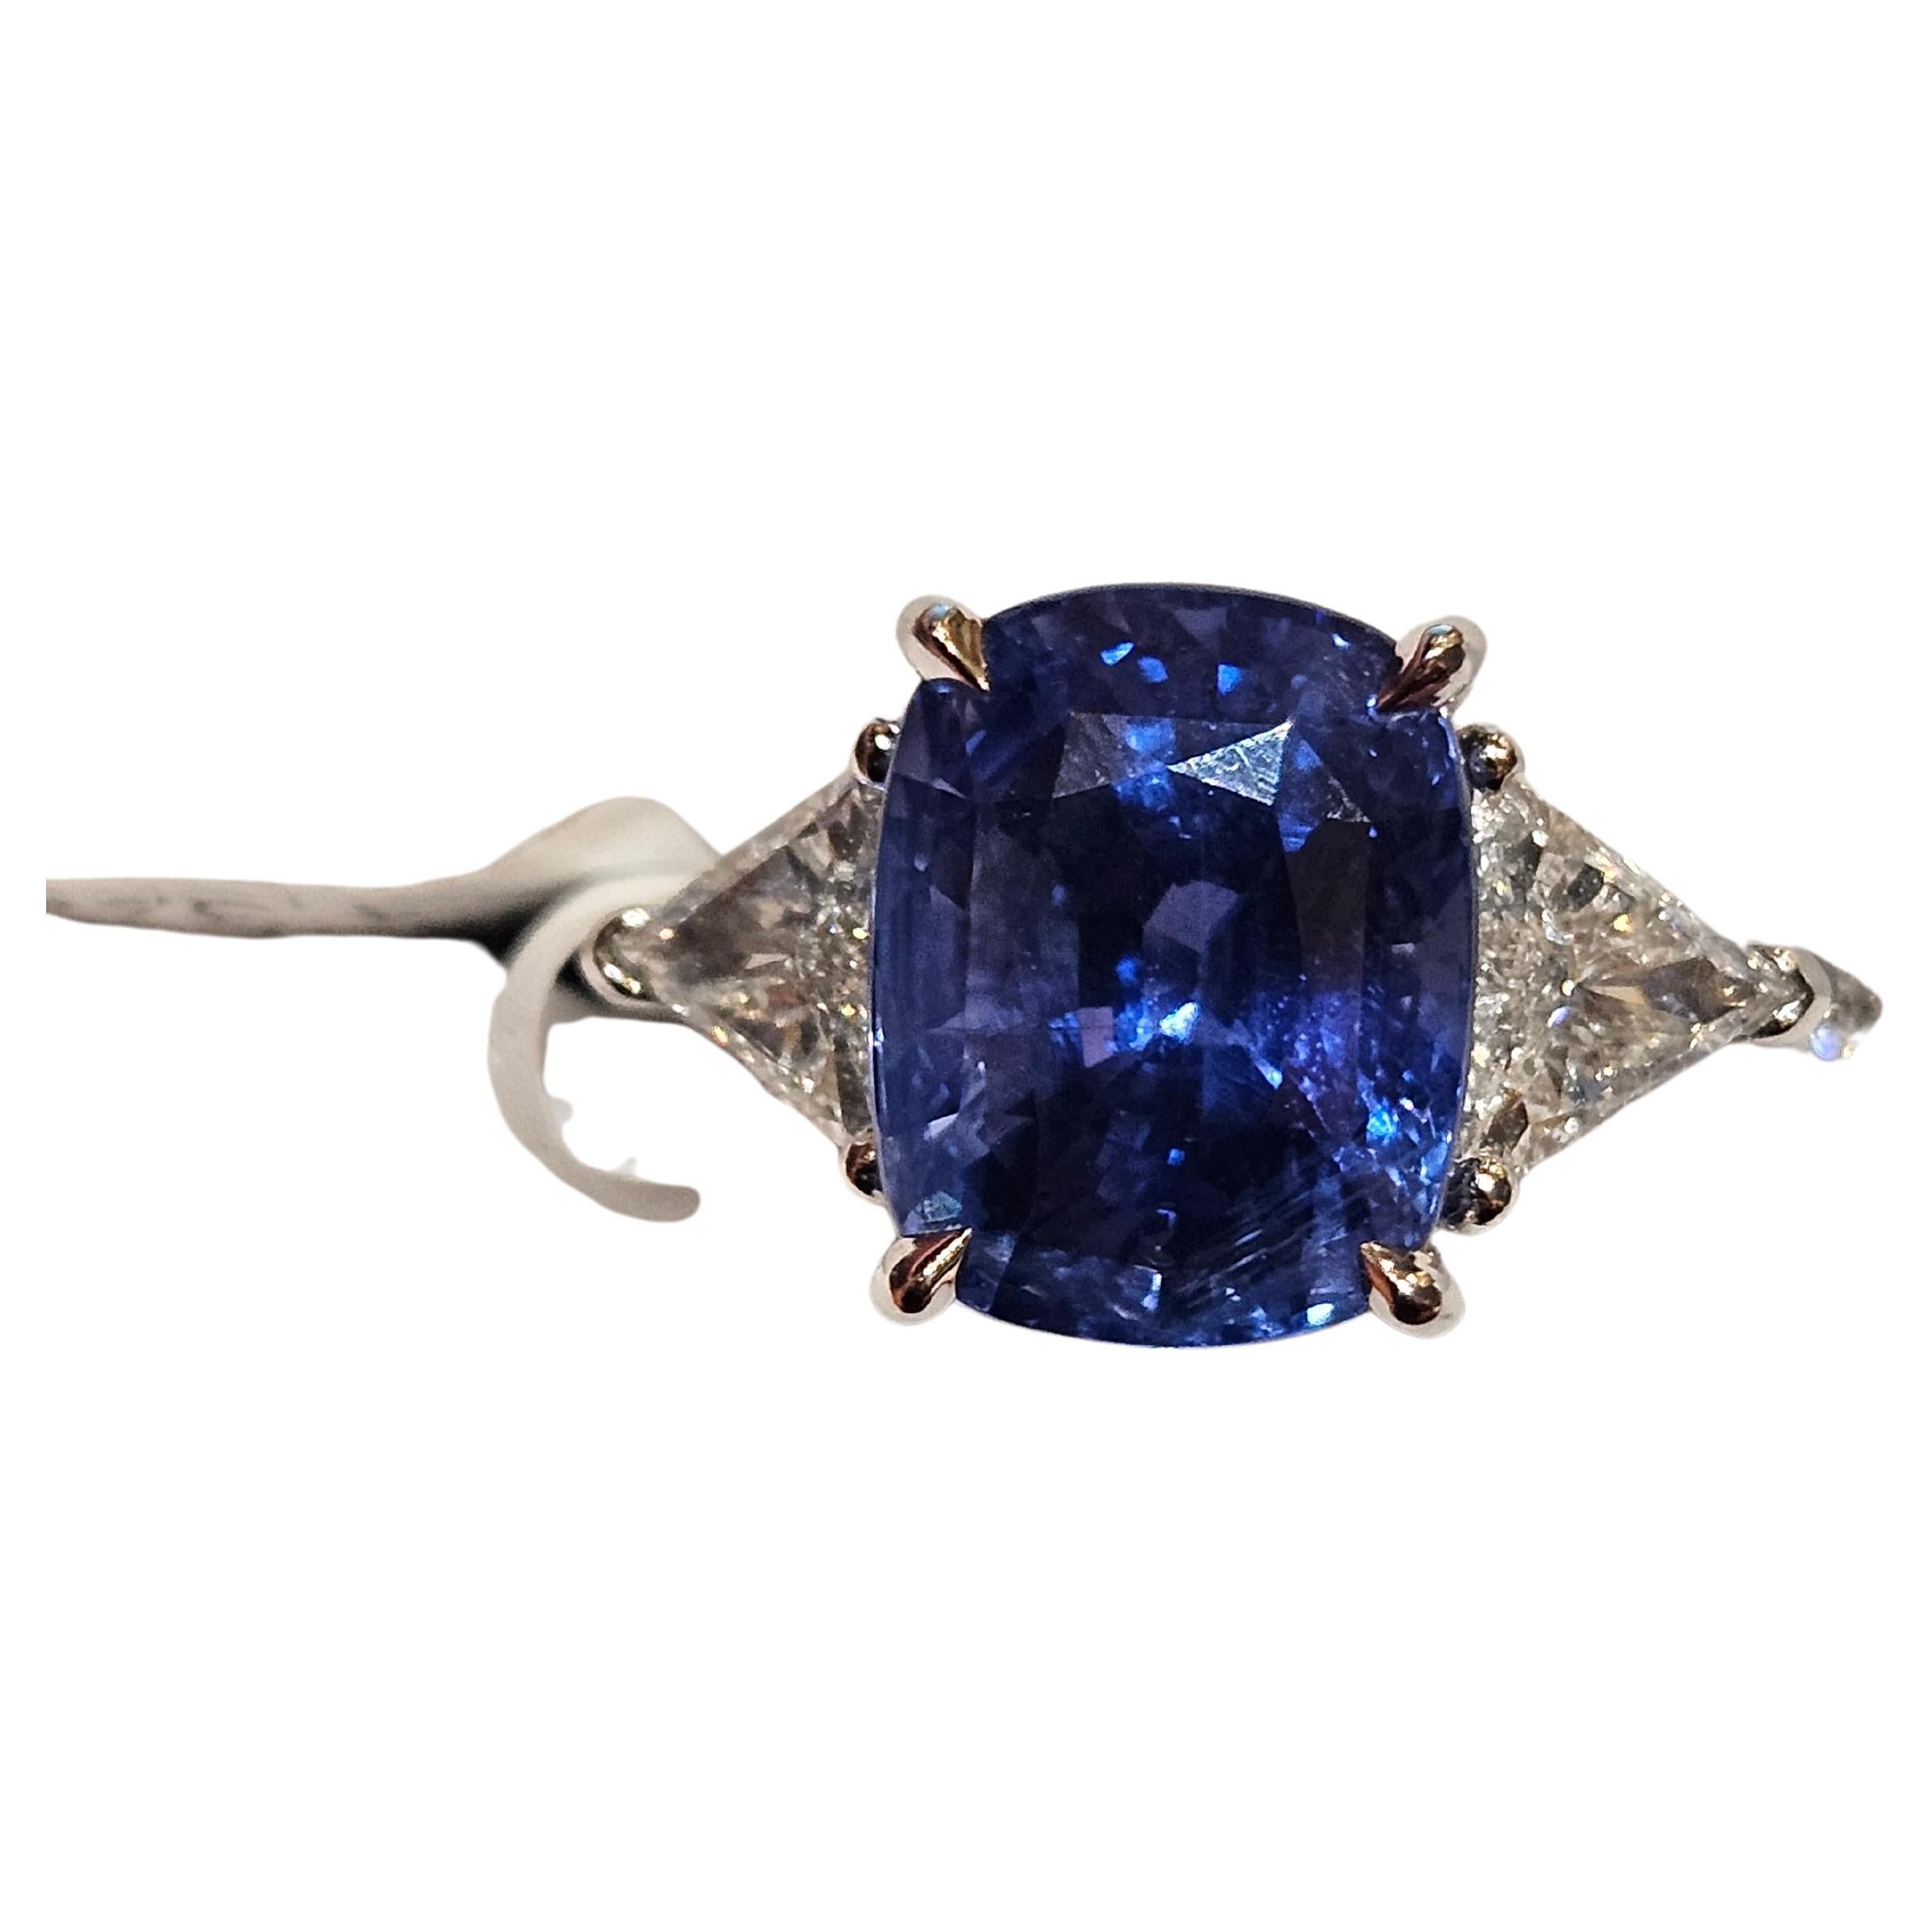 NWT $132, 200 18KT Gold Gorgeous Natural Large Ceylon Blue Sapphire Diamond Ring